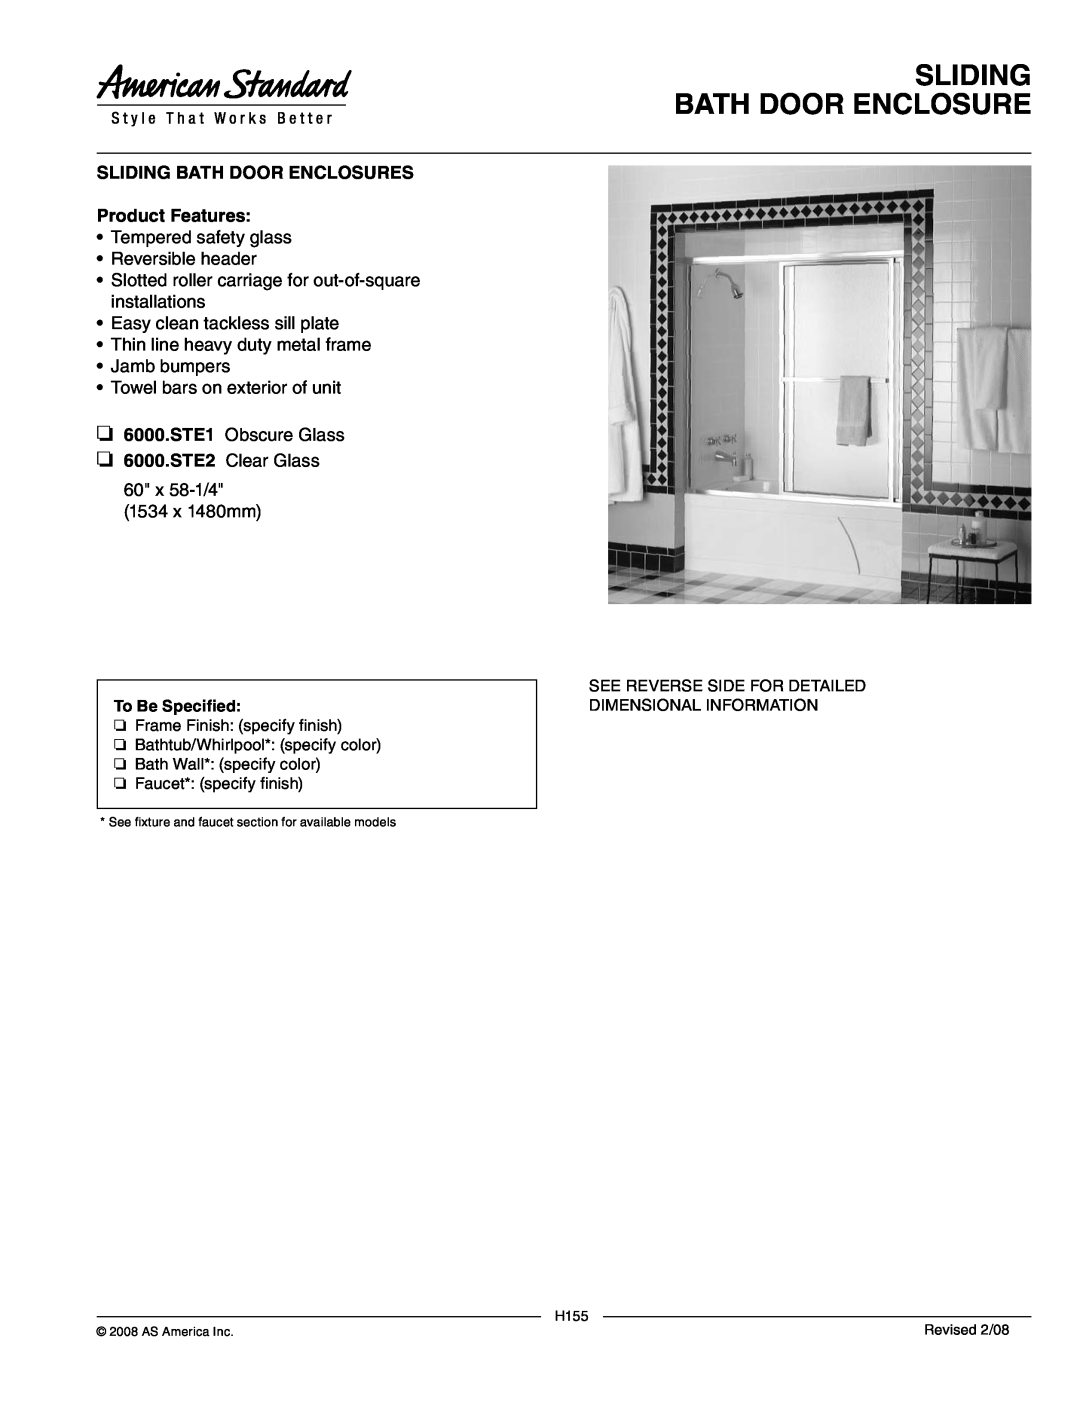 American Standard 6000.STE2, 6000.STE1 manual Sliding Bath Door Enclosure, SLIDING BATH DOOR ENCLOSURES Product Features 